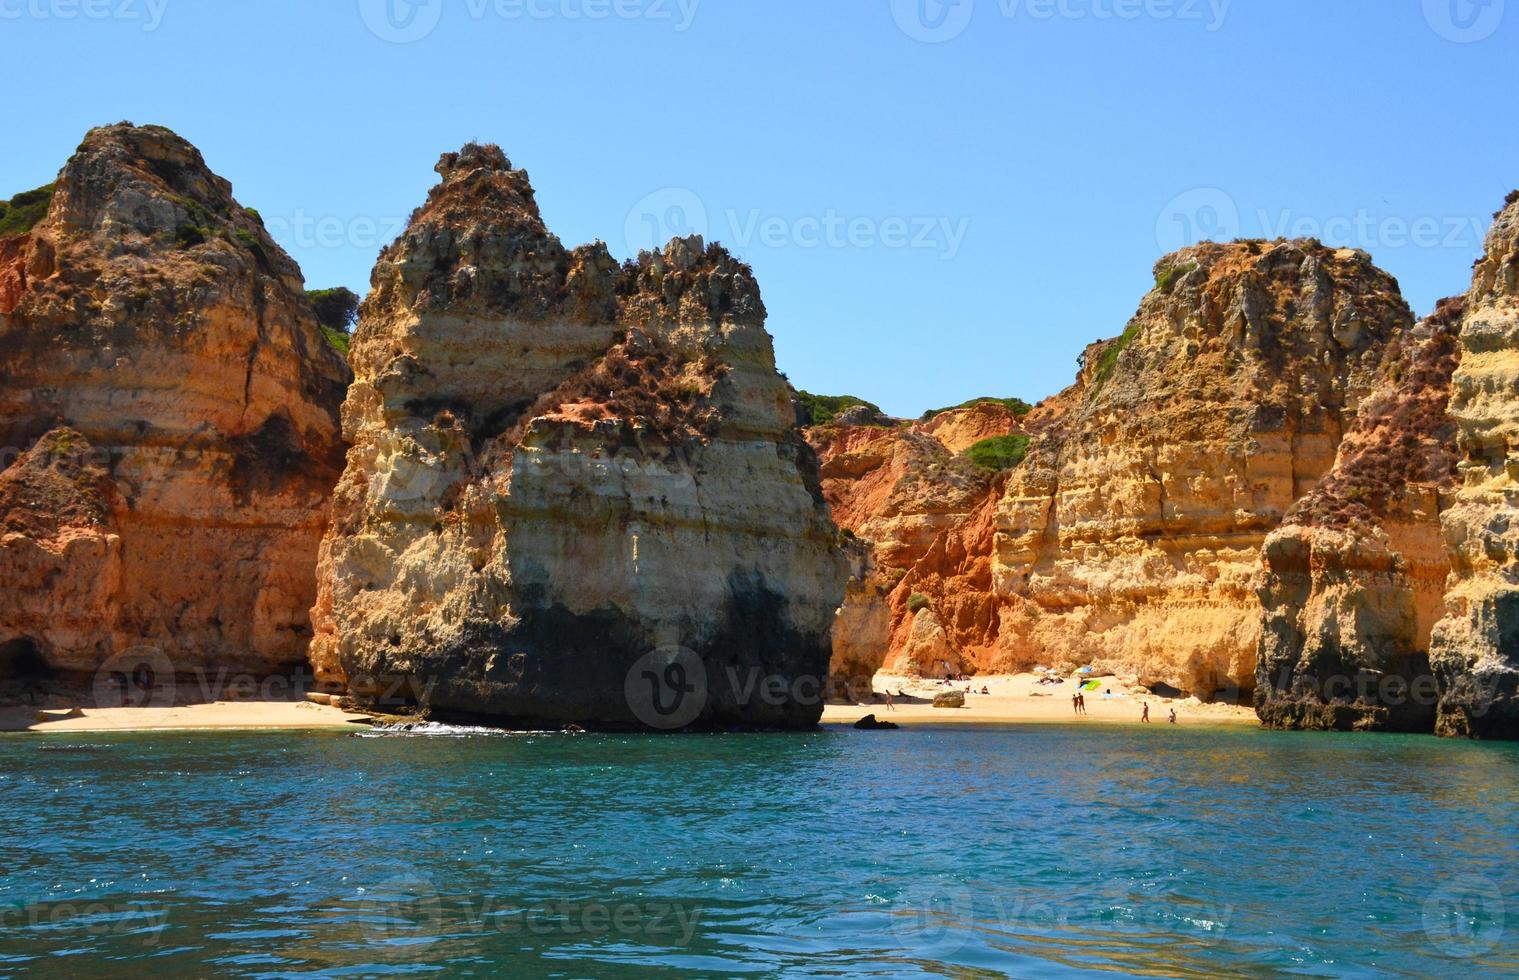 rochas e praia em portugal, lagos foto